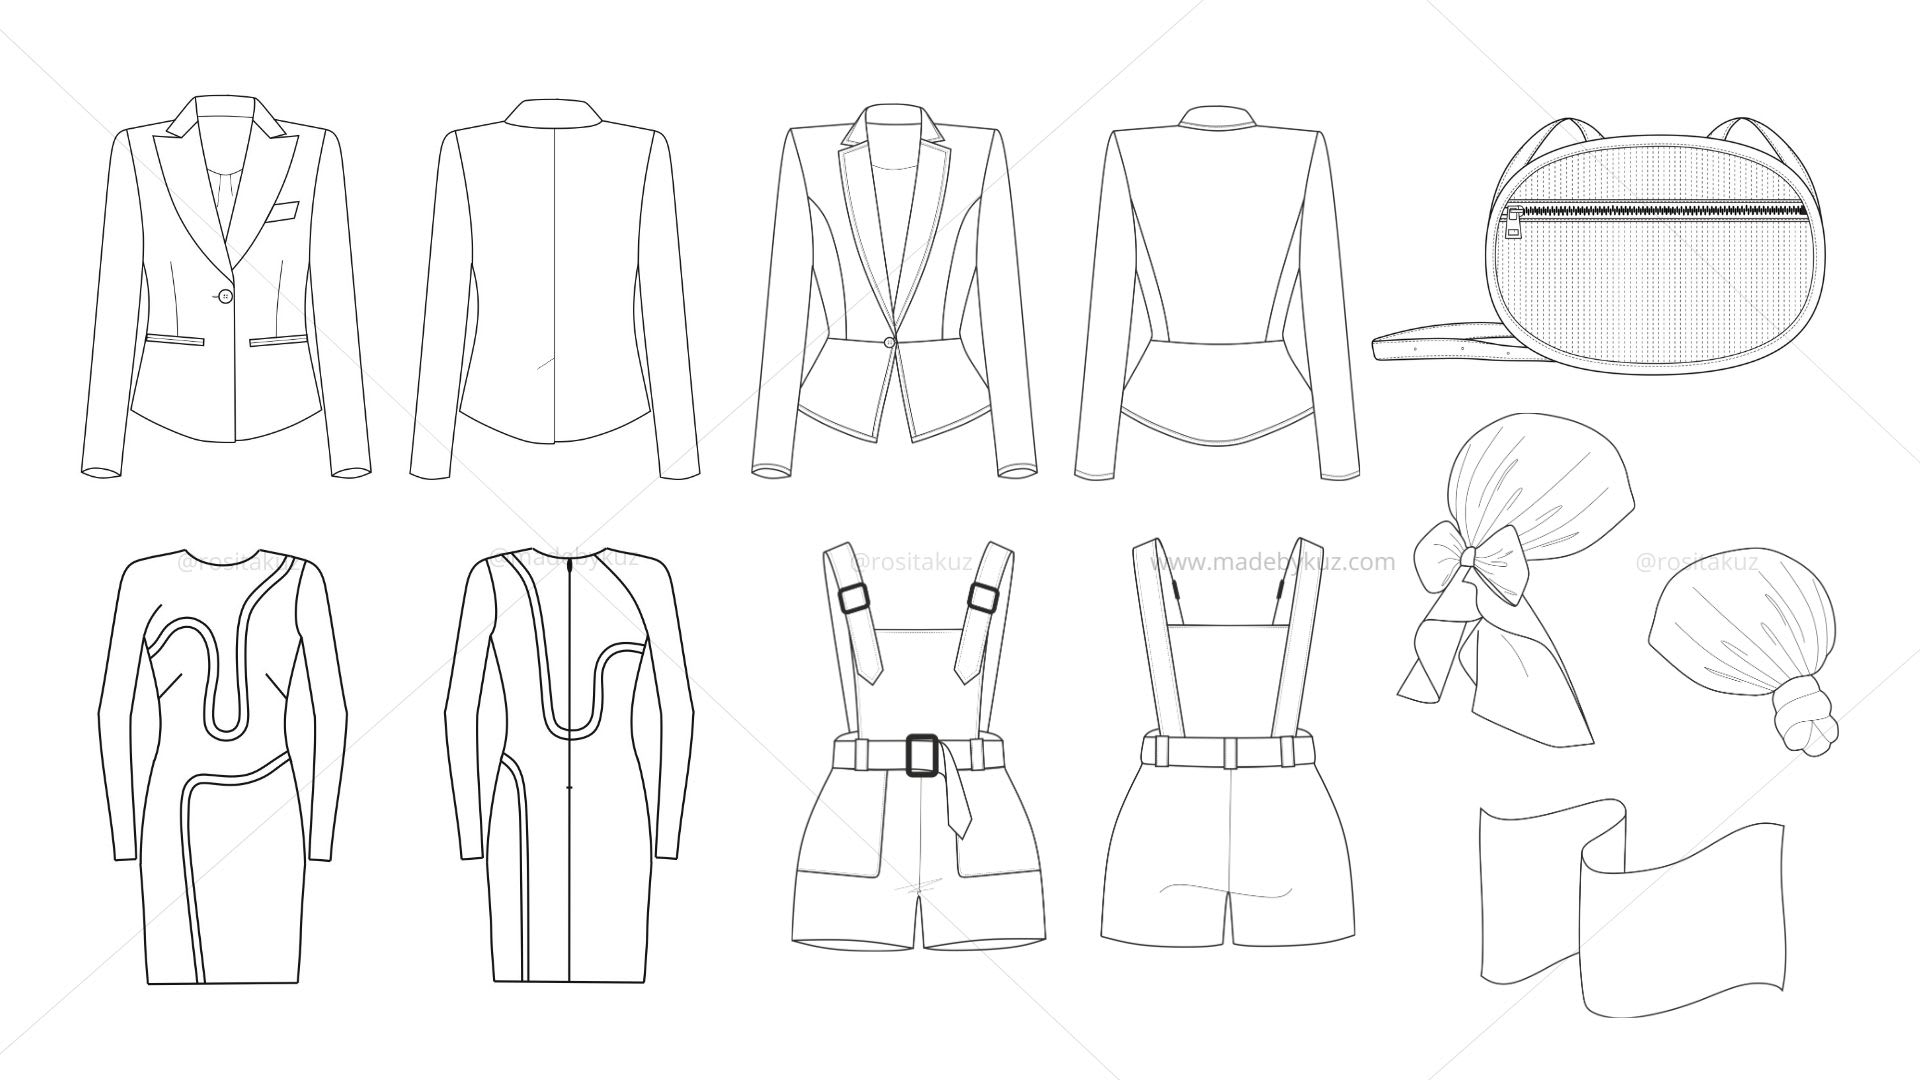 Design fashion cad illustration flats technical drawings by Rositakuz |  Fiverr